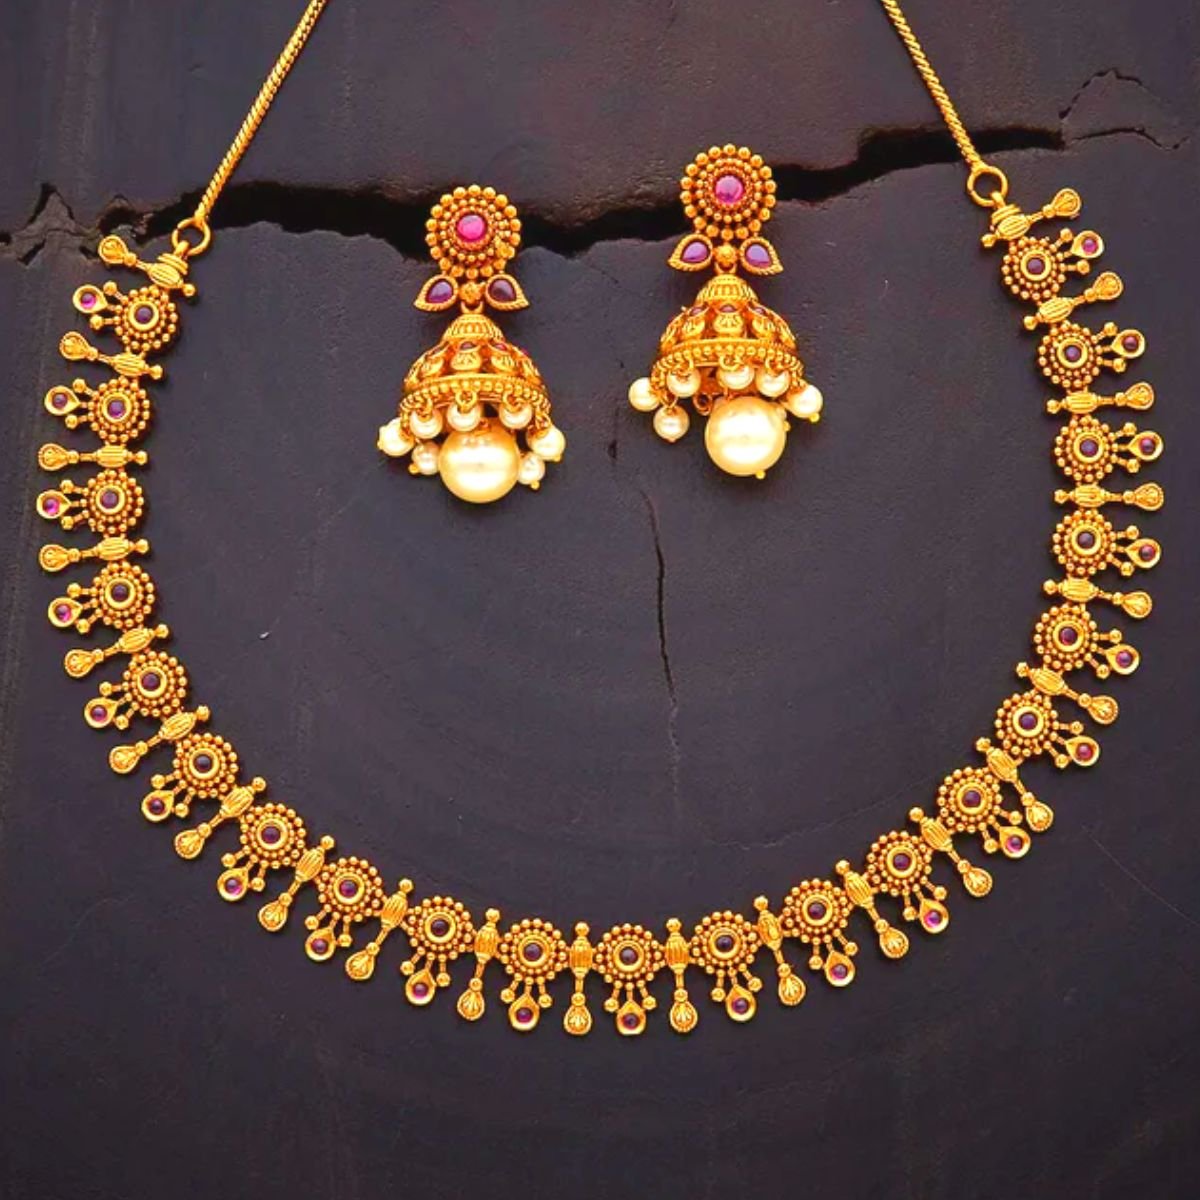 Senorita Jewellery - The World of Guarantee 1 Gram Gold